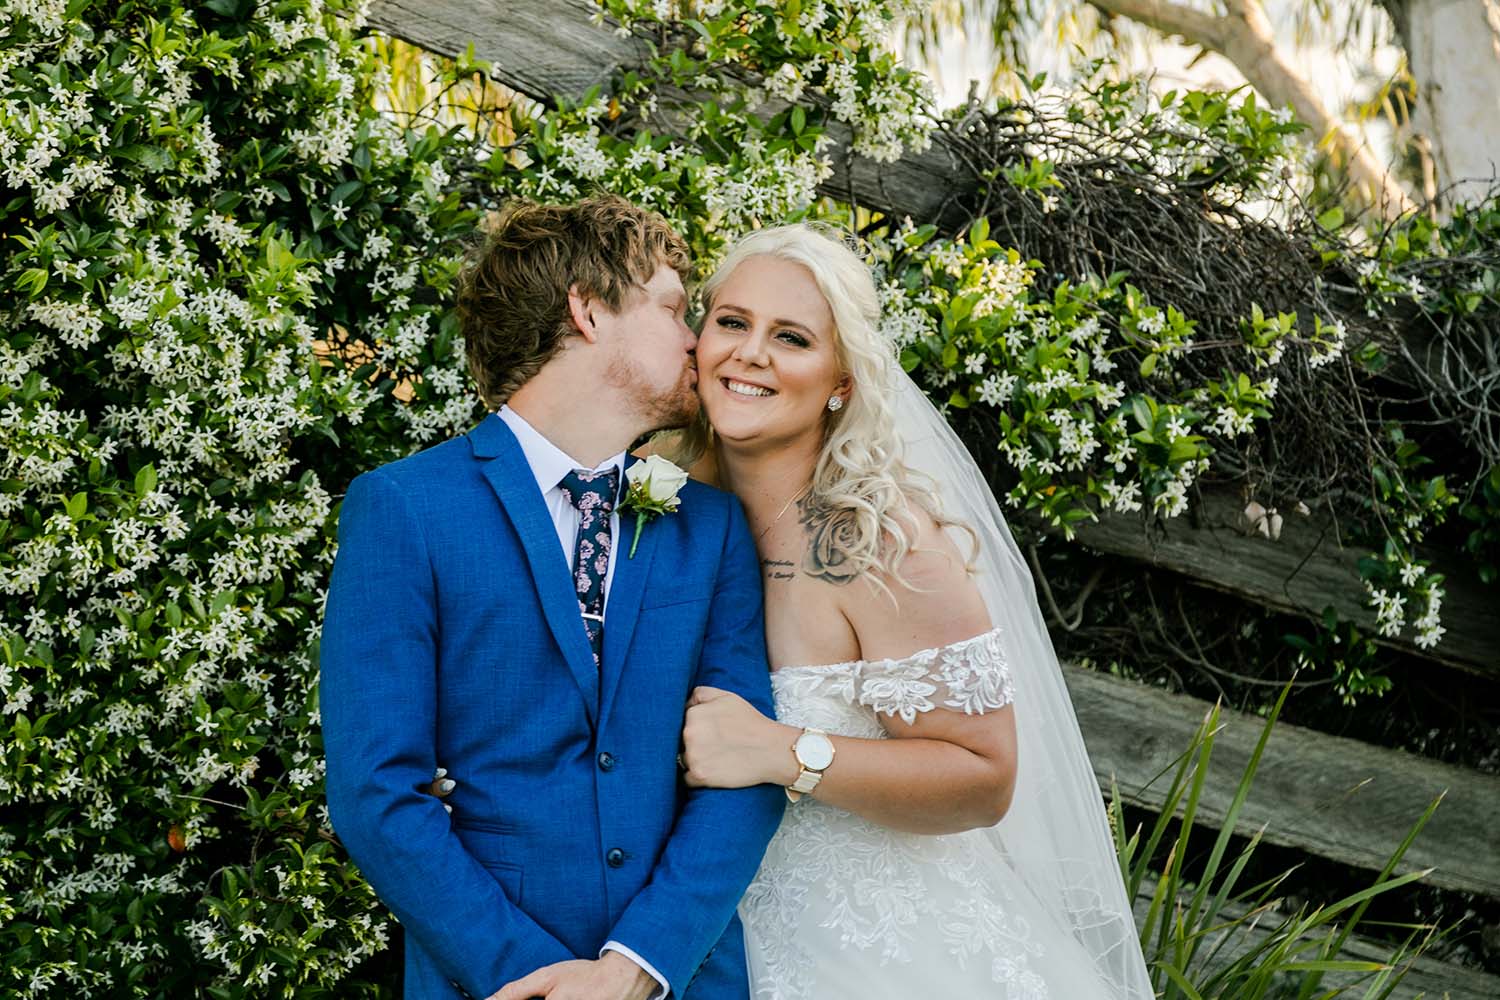 Wedding Photography - Groom kissing bride on cheek